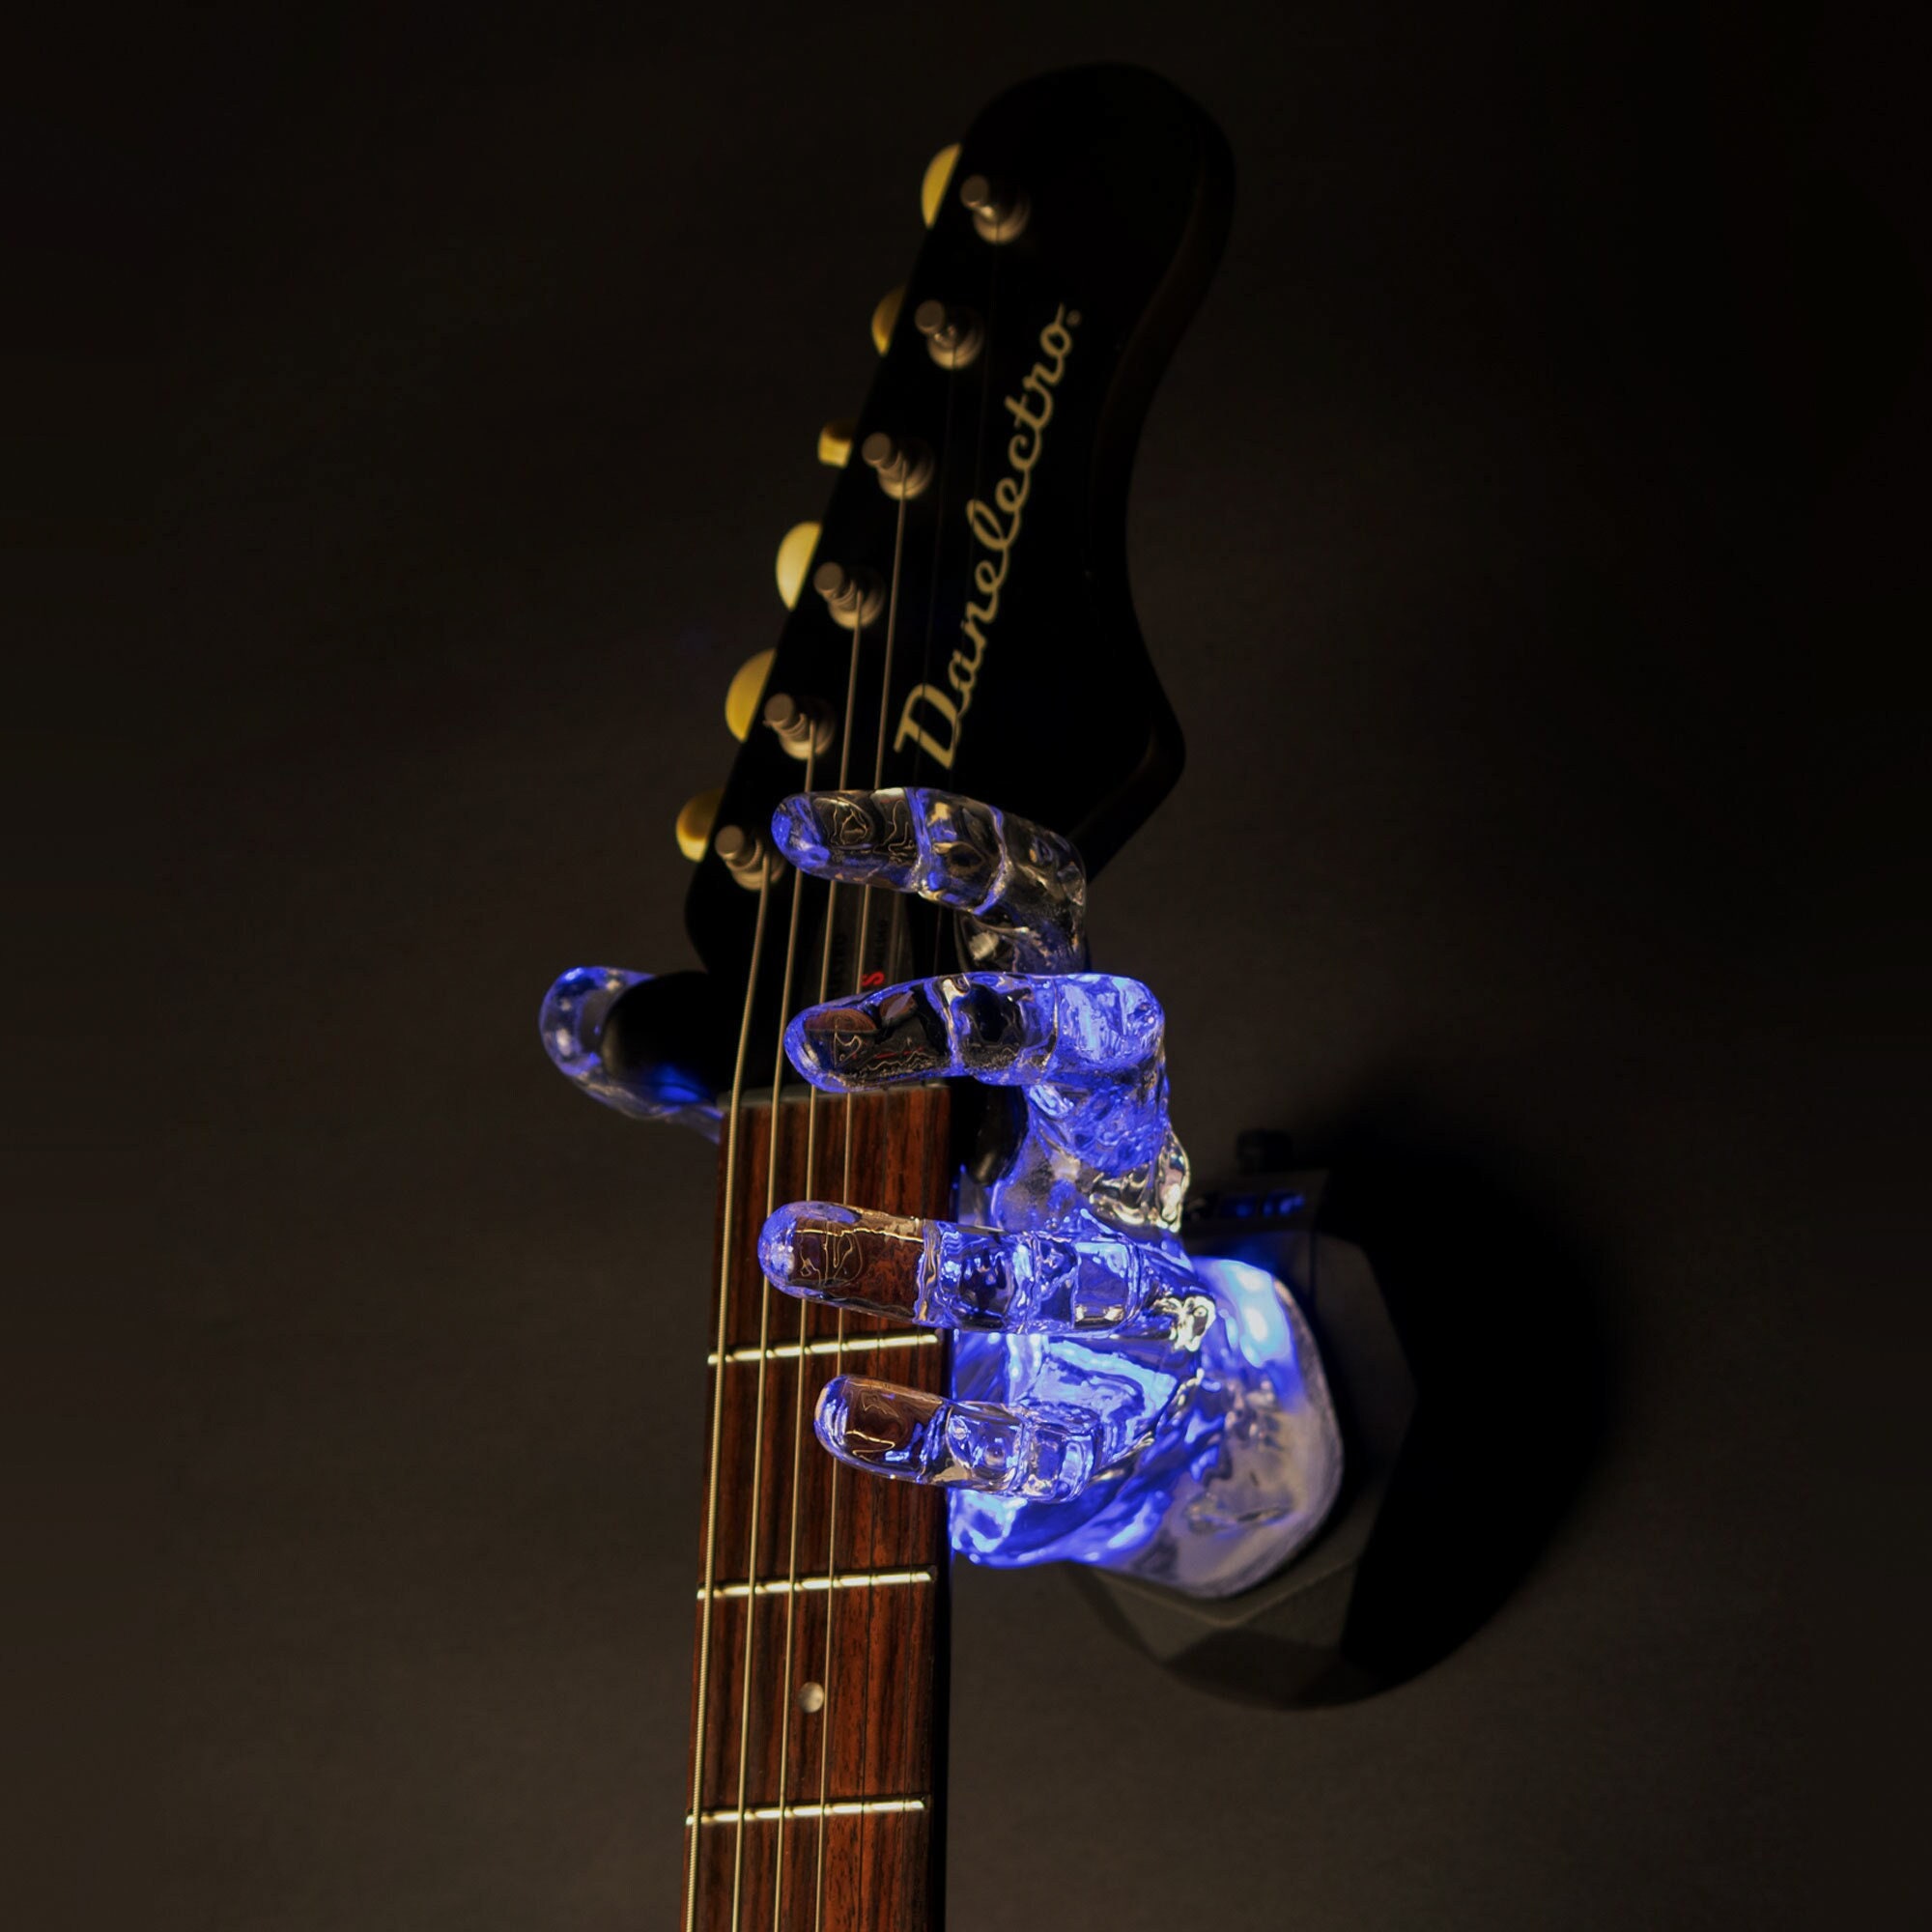 GuitarGrip Hand Shaped Copper Finish Guitar Hanger, Guitar Wall Mount-Left